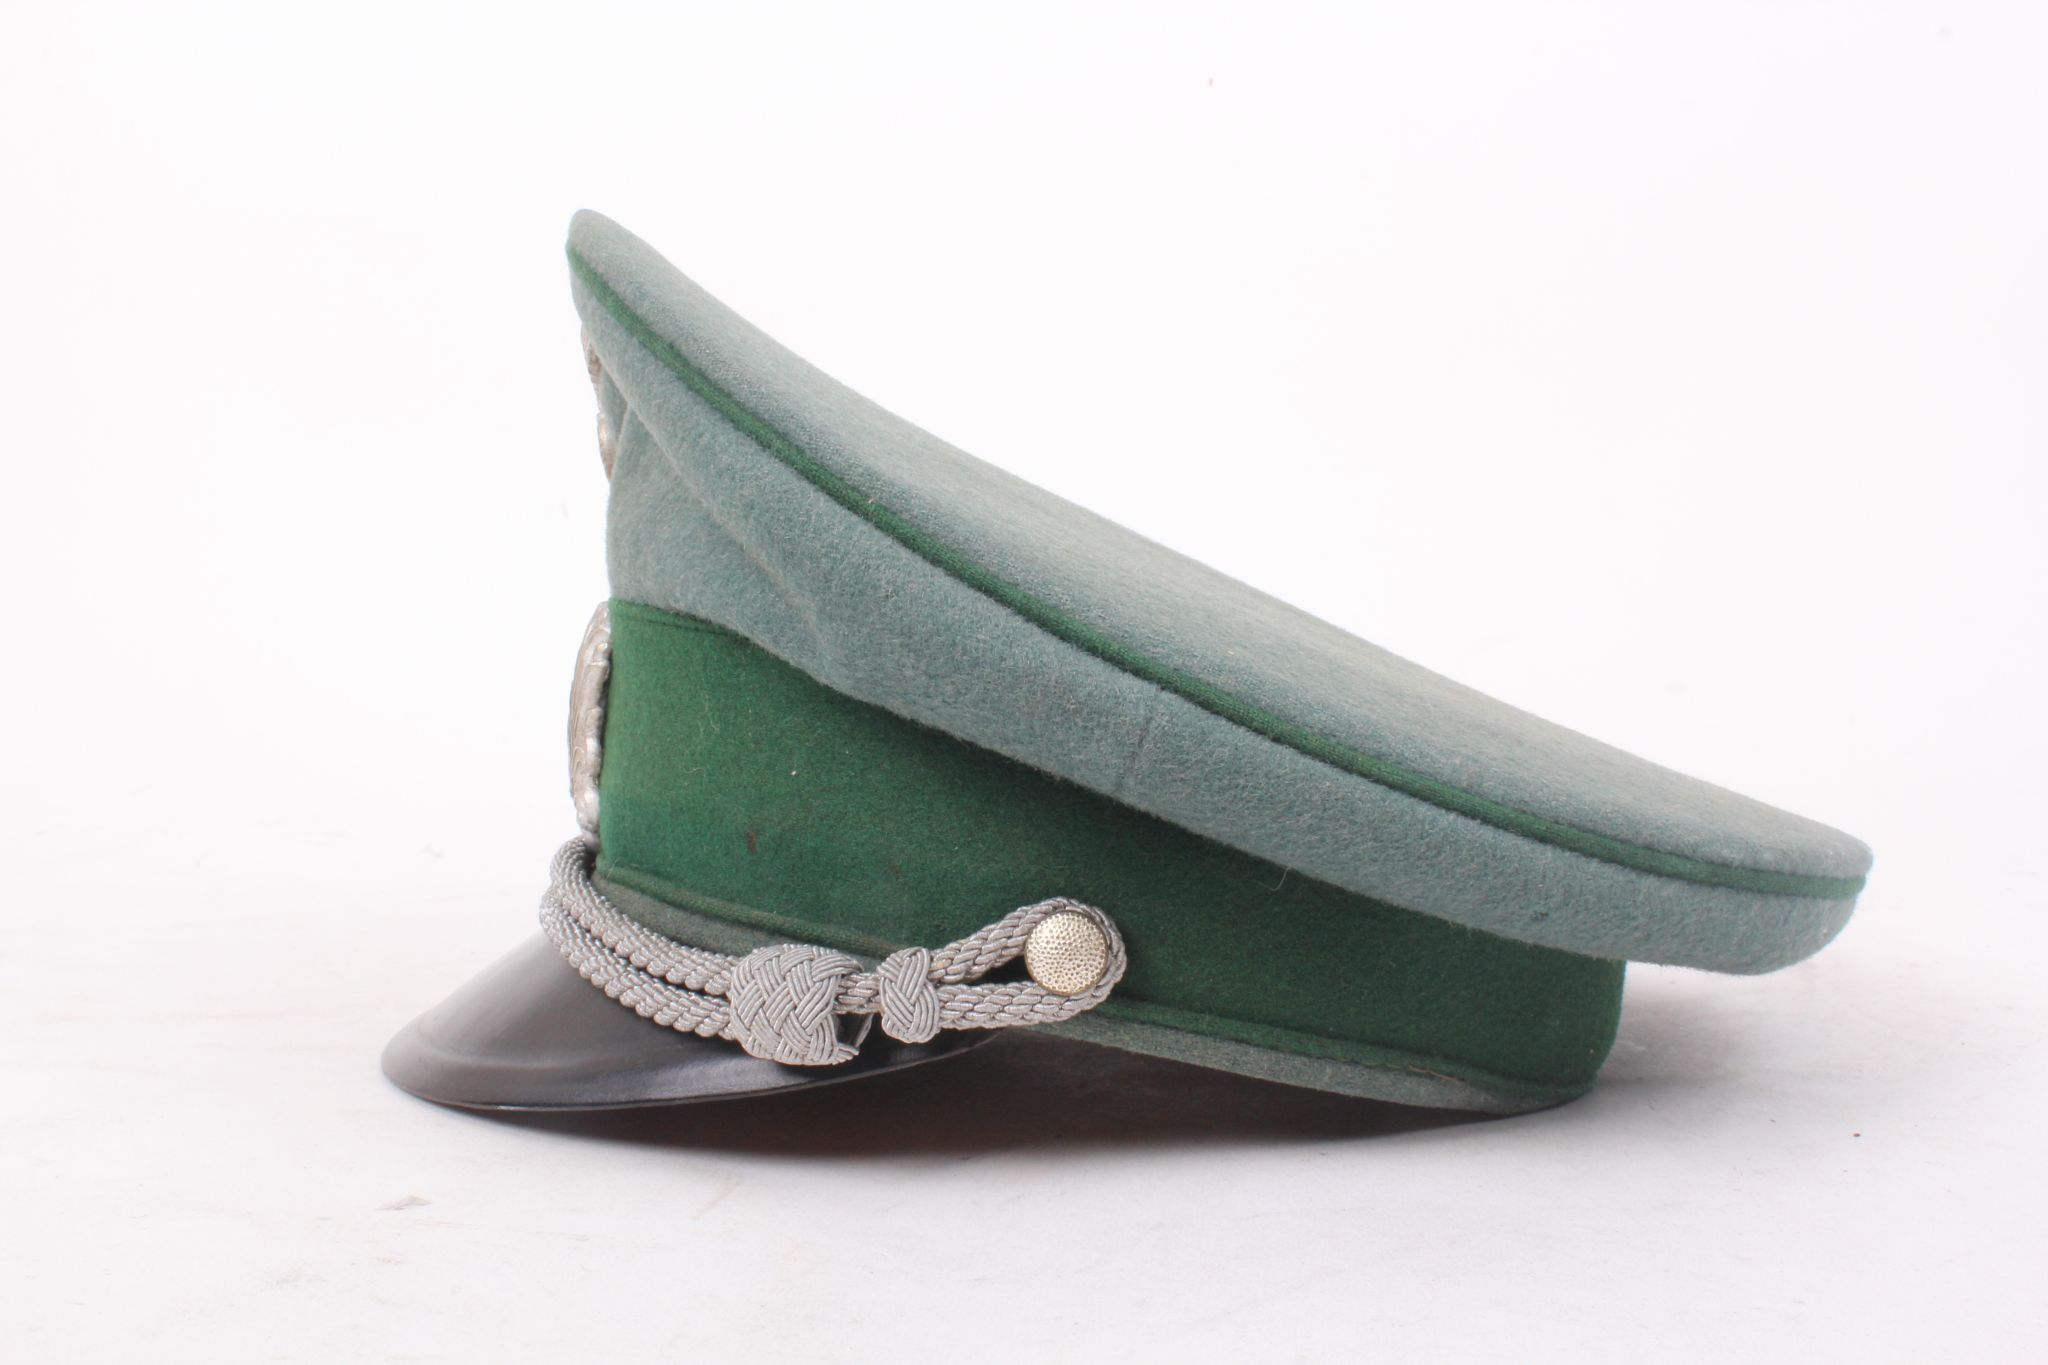 WW2 3rd Reich German Heer army Schirmmutze visor cap, Army Administration Officer / Customs, eagle - Image 3 of 5